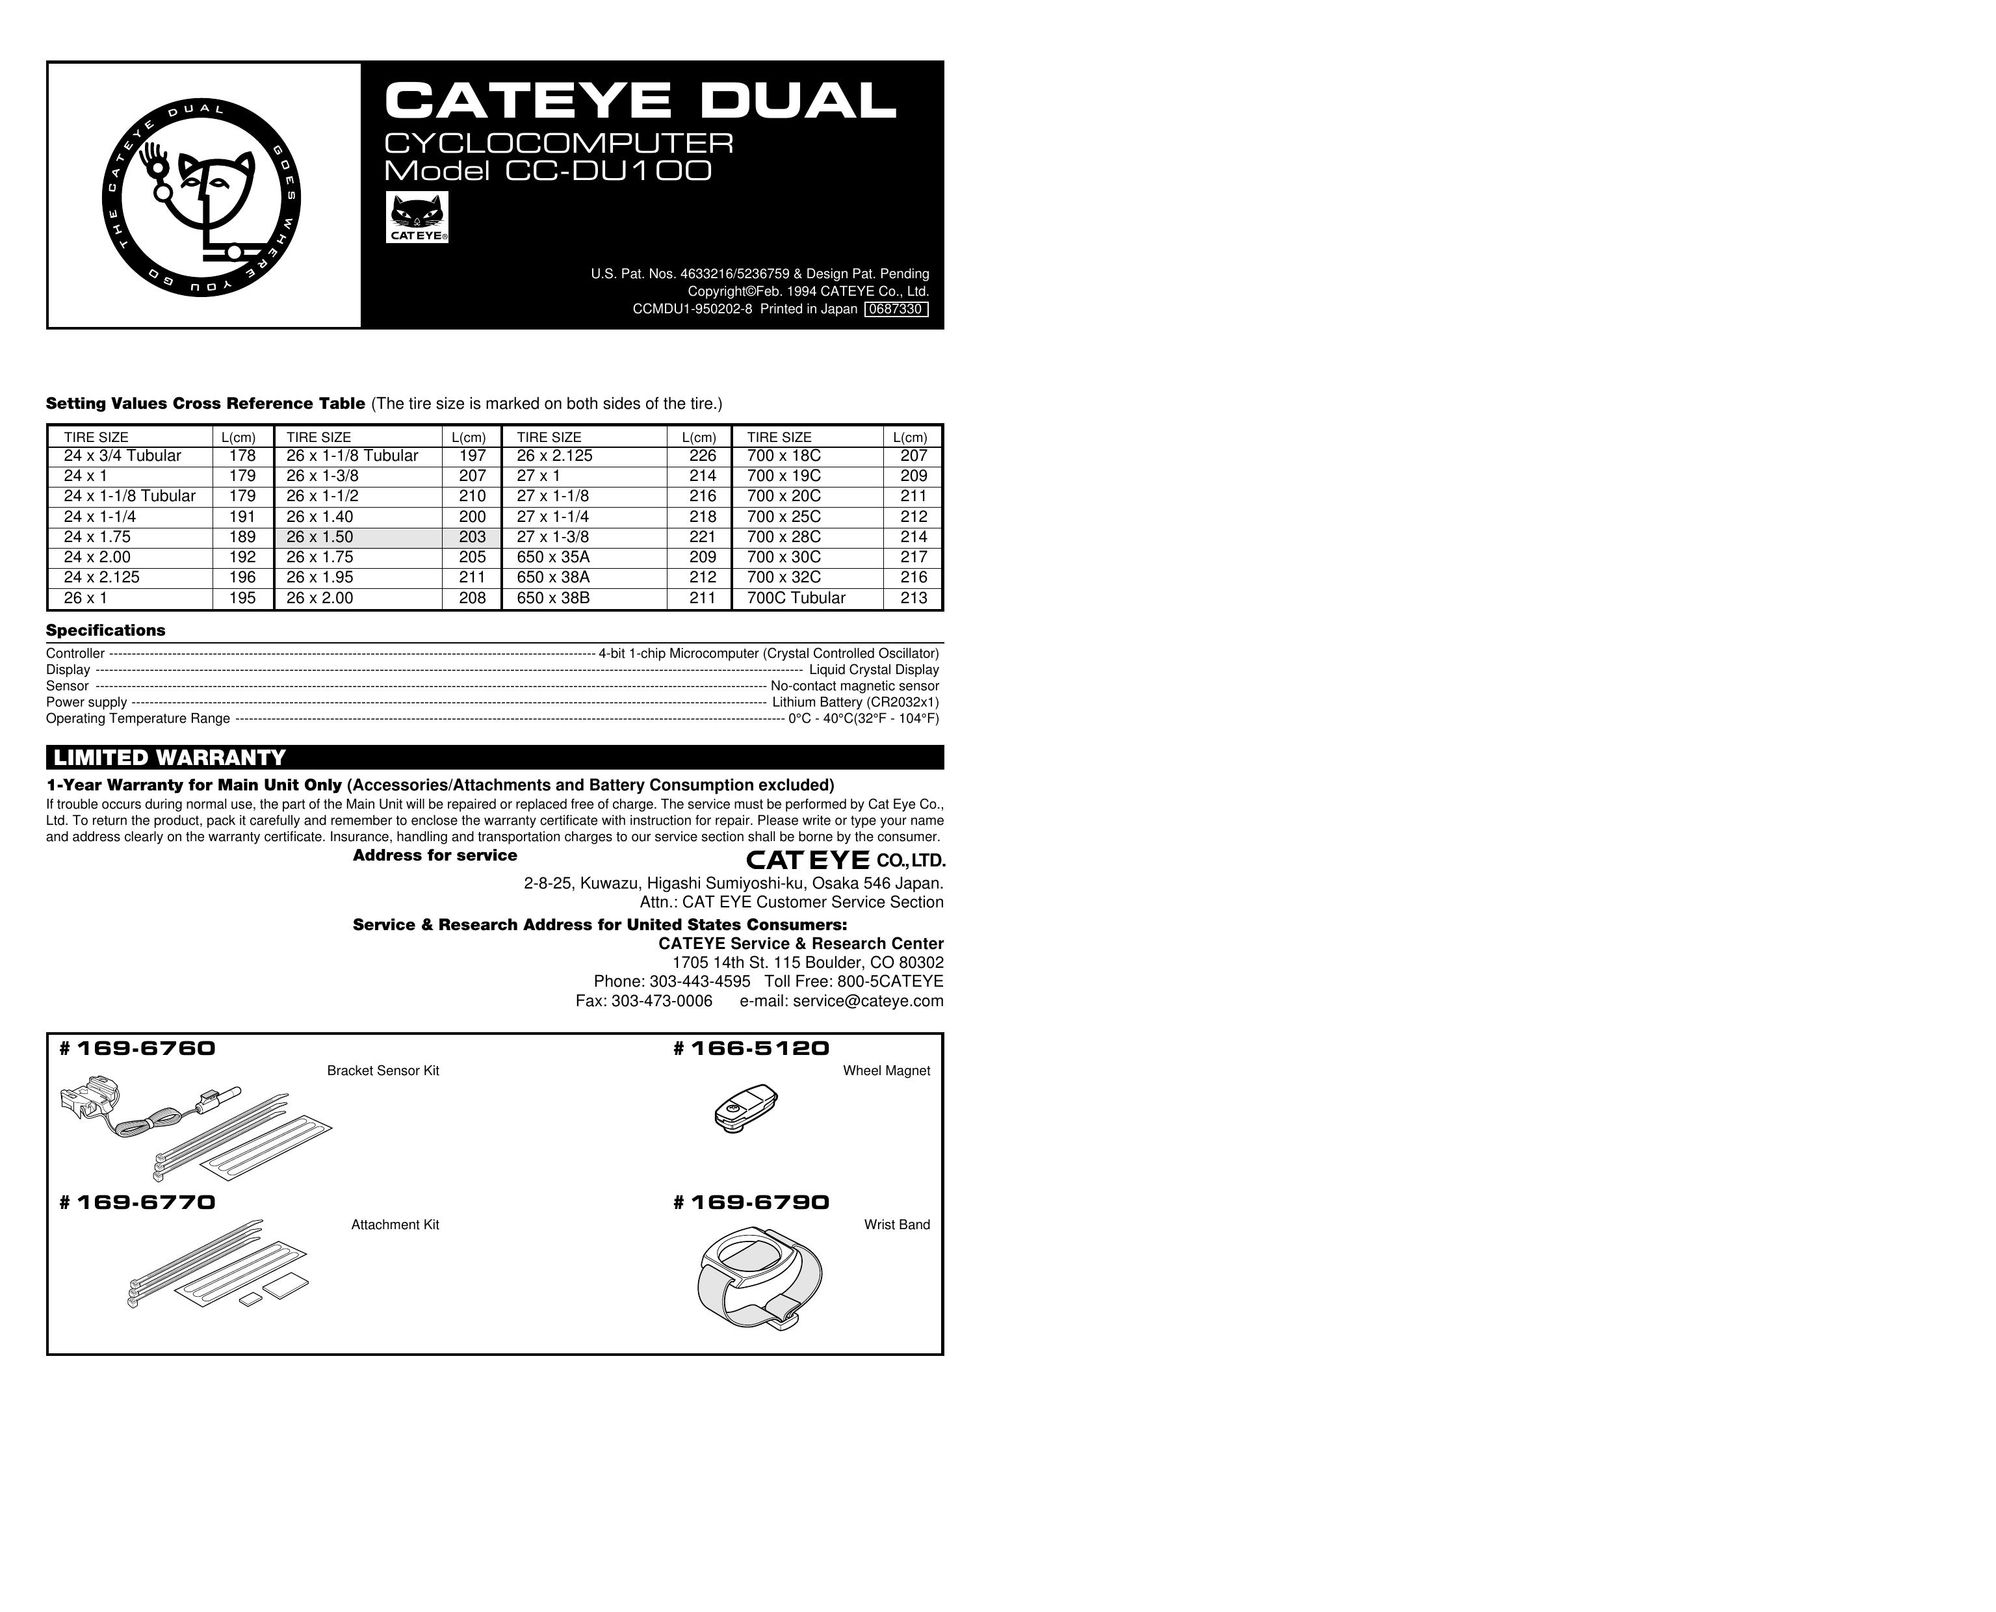 Cateye CC-DU1OO Cyclometer User Manual